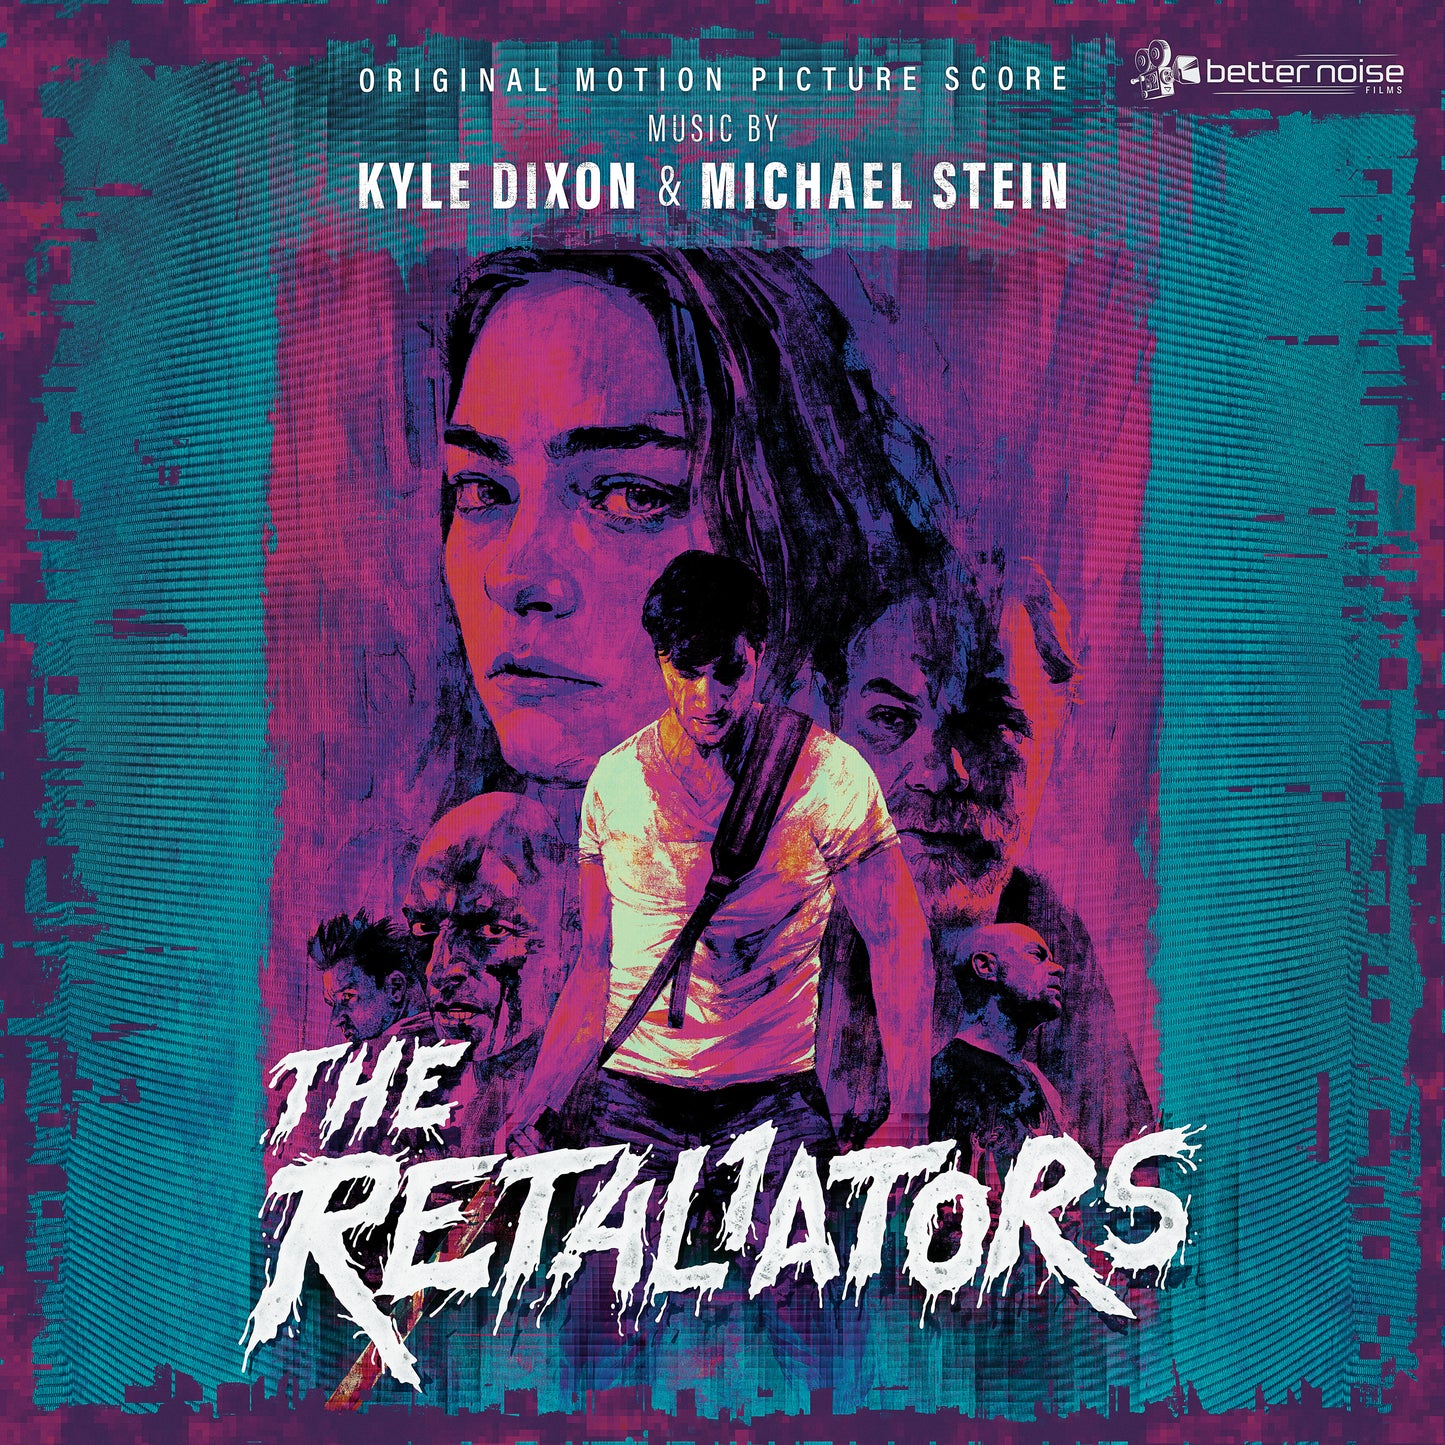 Kyle Dixon & Michael Stein - The Retaliators Soundtrack Score - CASSETTE